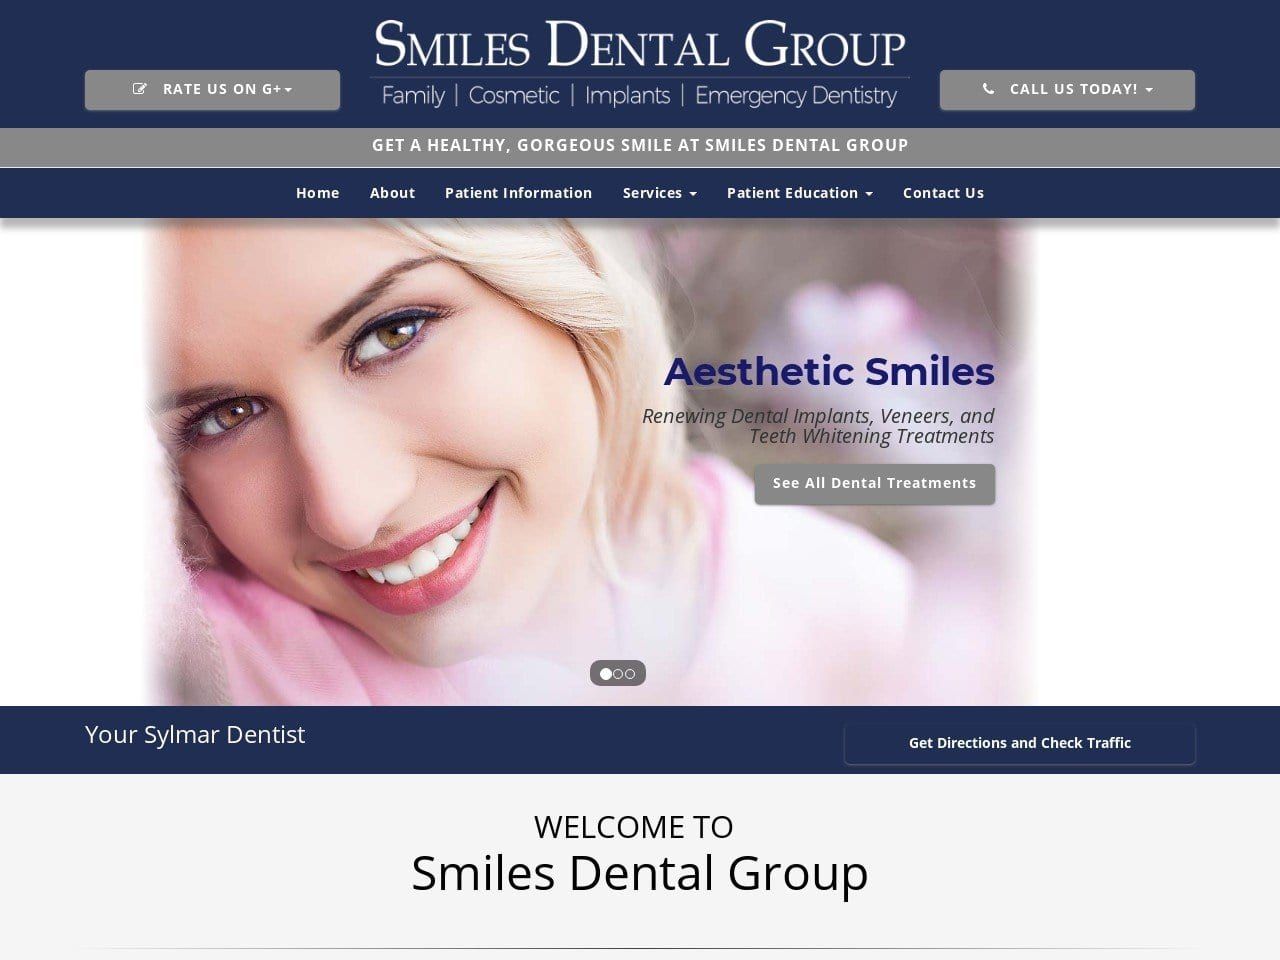 Smiles Dental Group Website Screenshot from thesmilesdentalgroup.com